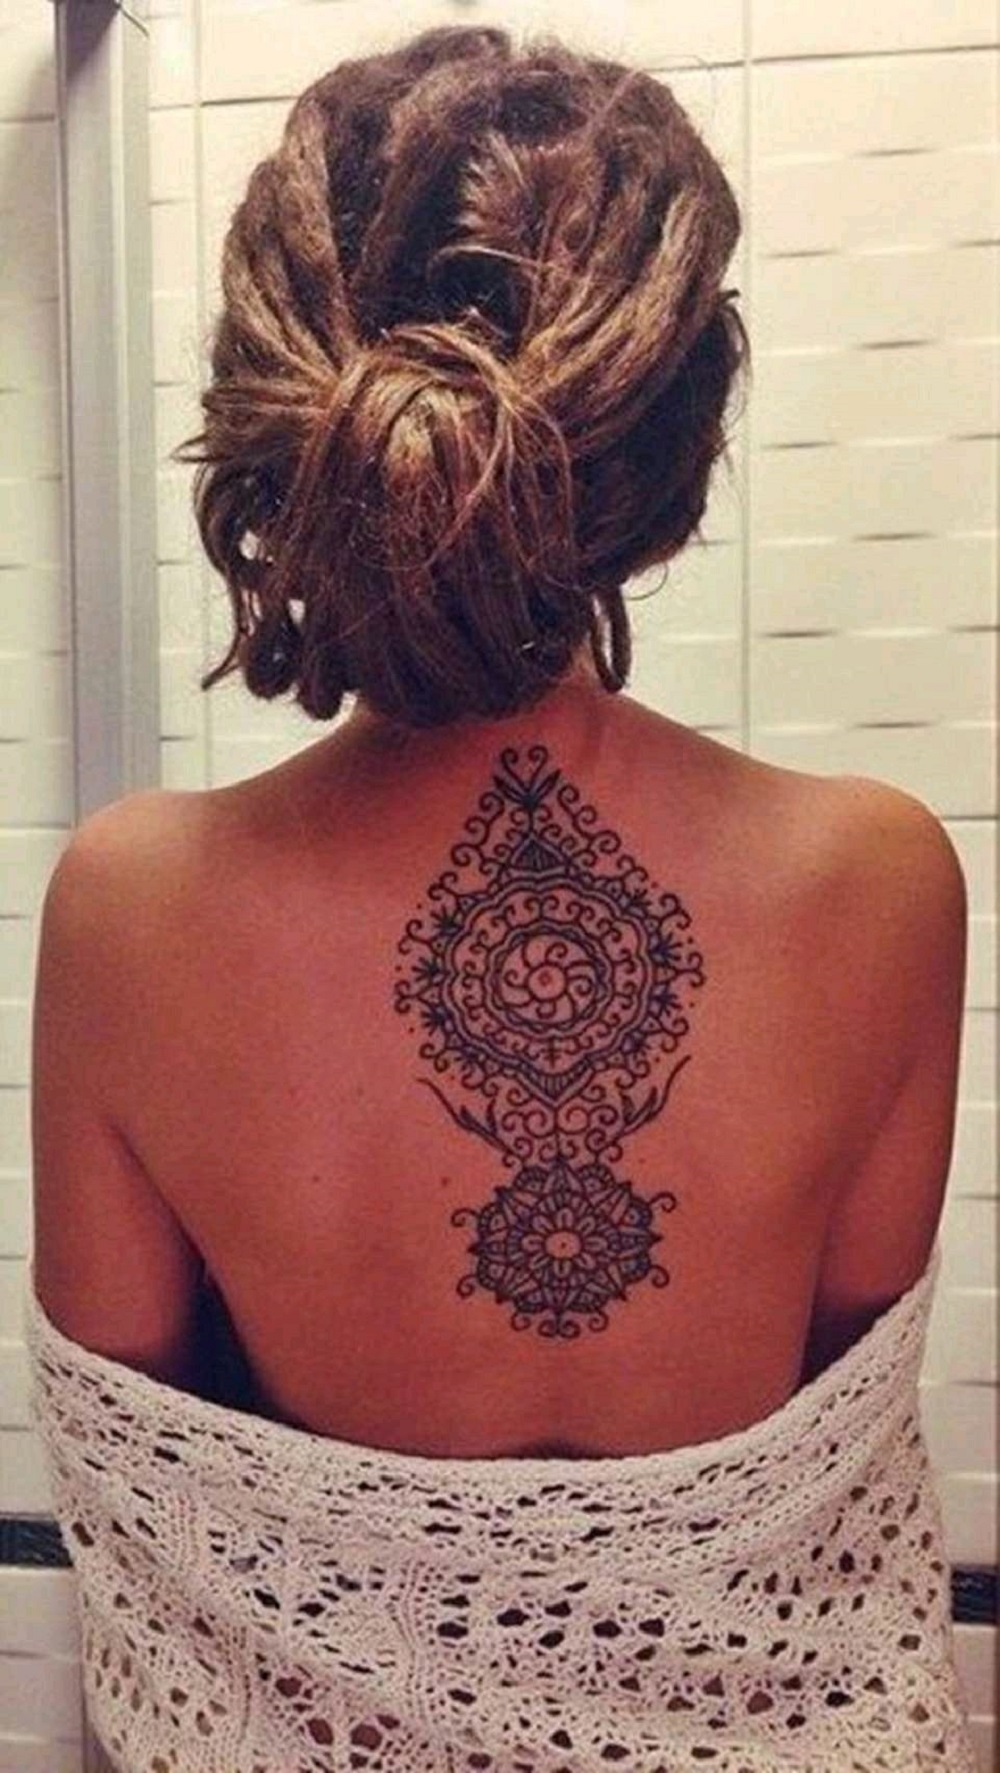 Tatuagem nas costas - linda mandala.